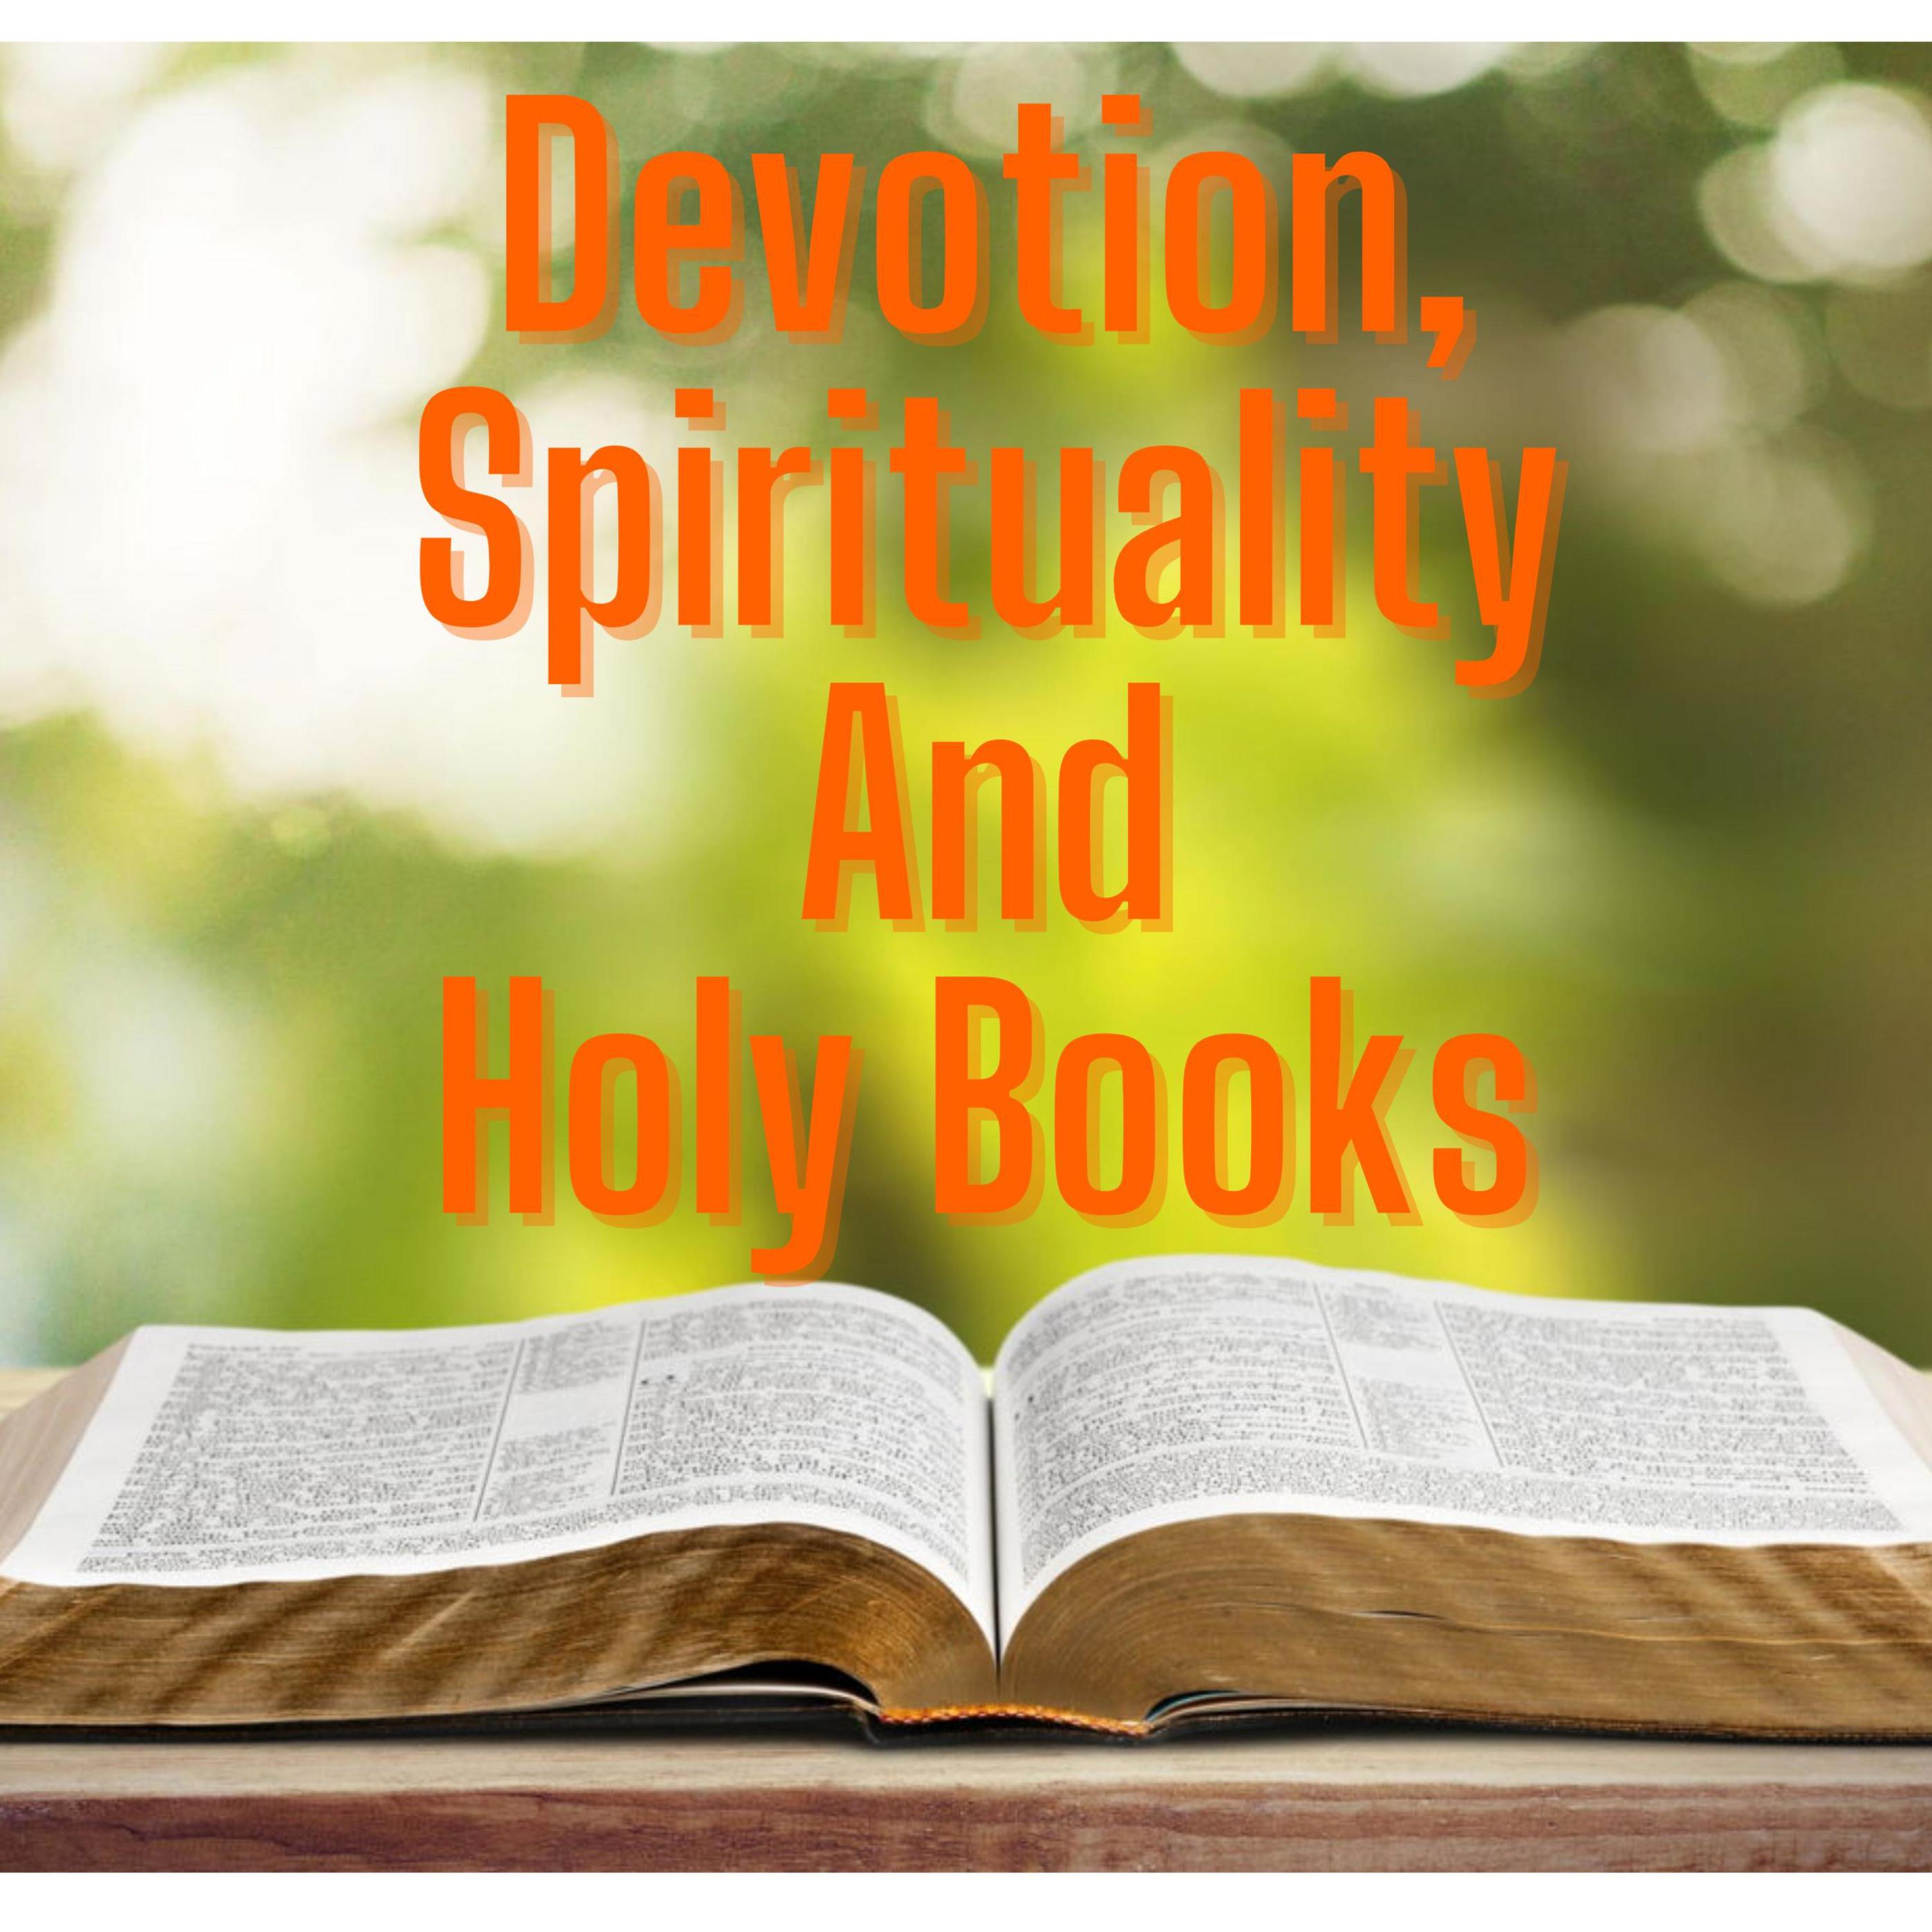 Devotion, Motivation and Spirituality